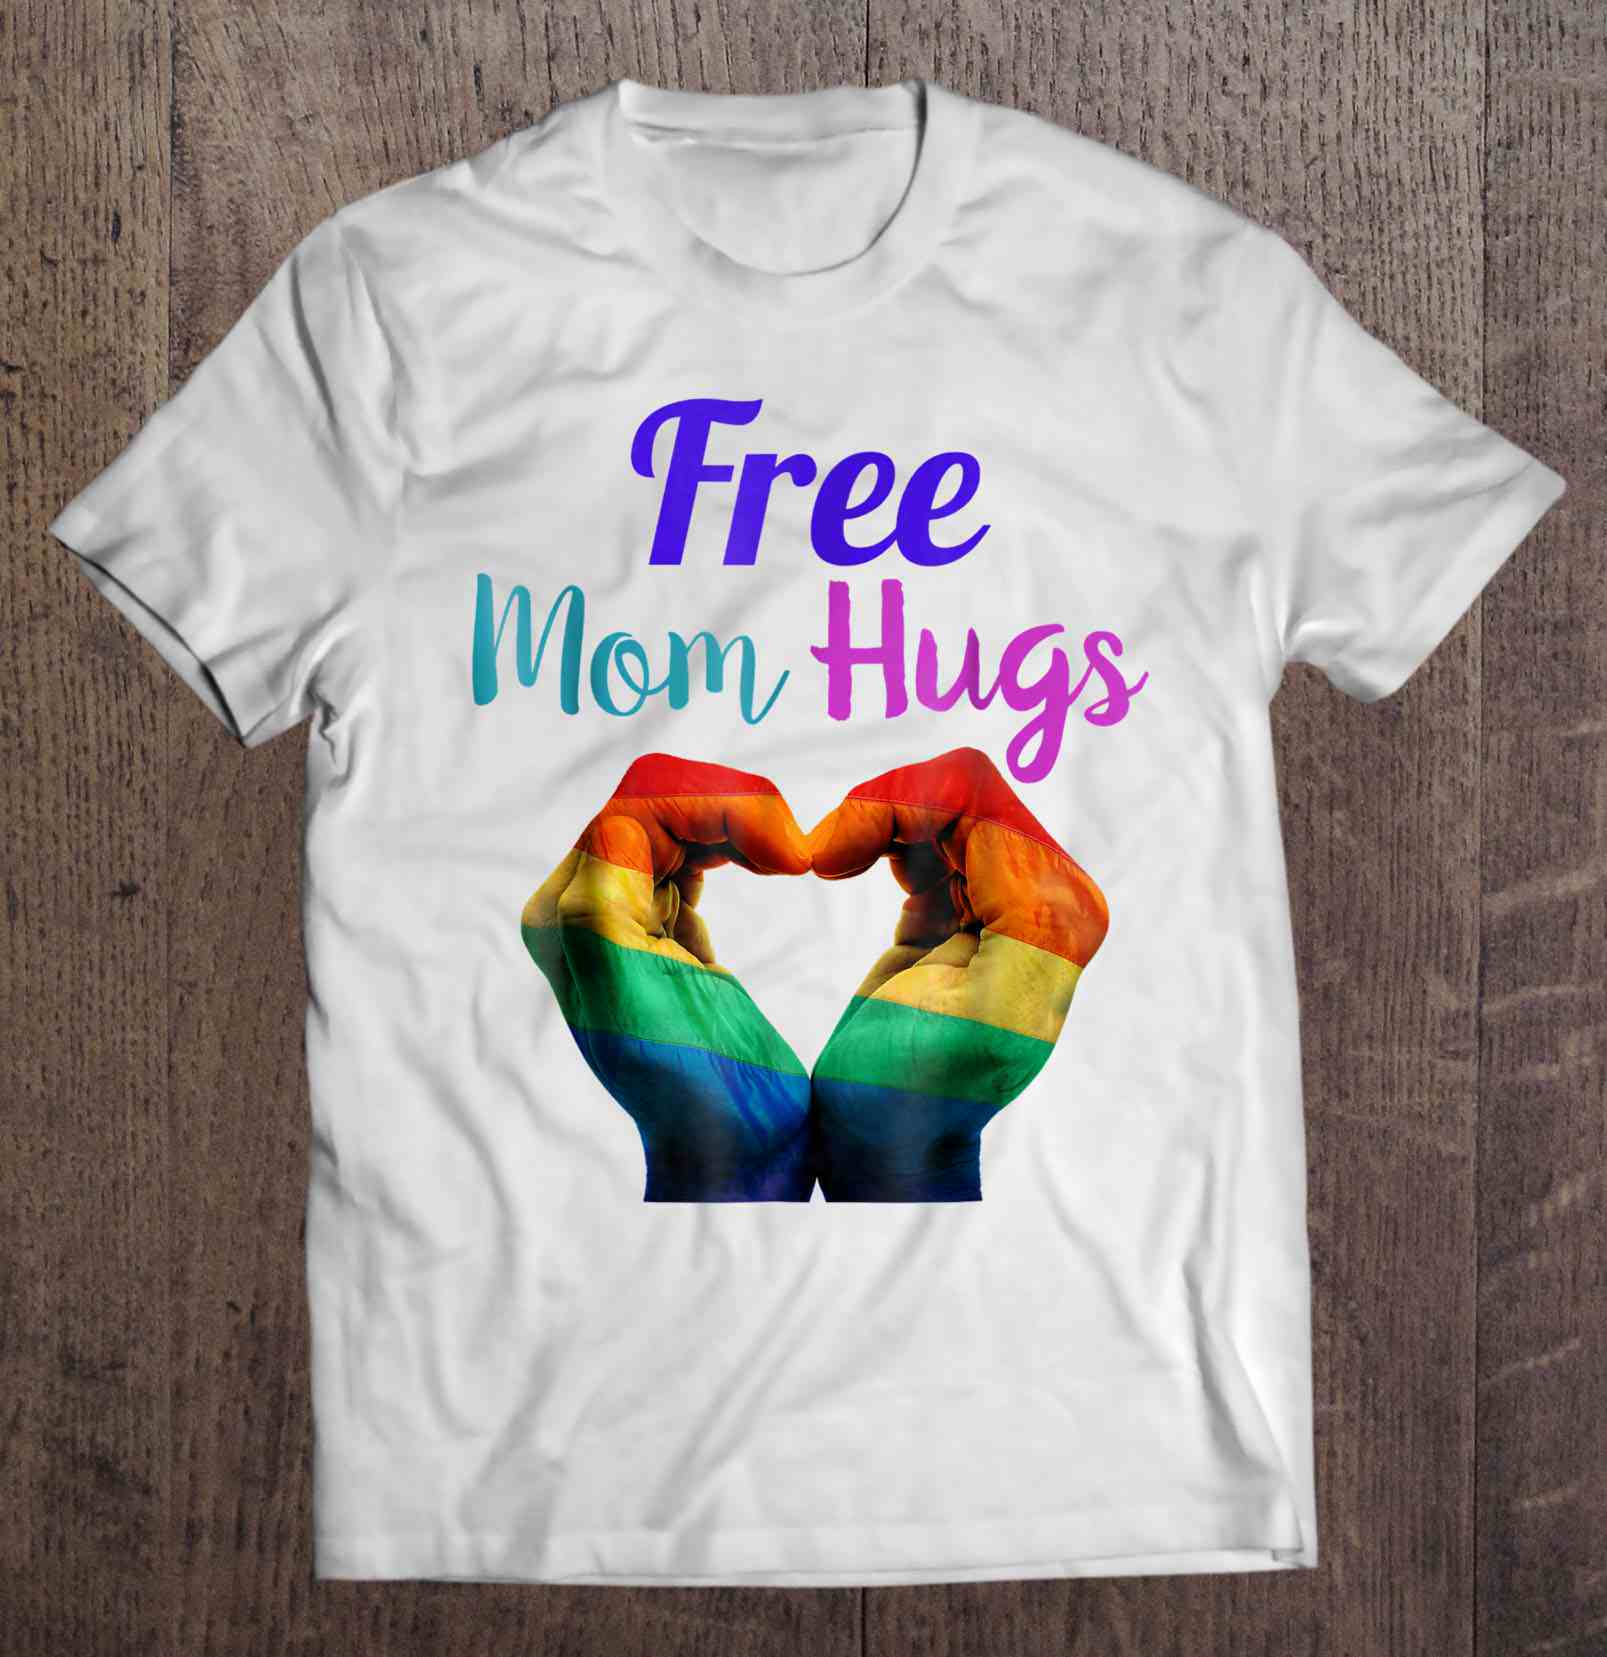 Free Mom Hugs LGBT Pride Shirt, Gifts Mama Bear LGBT Shirt, Equality